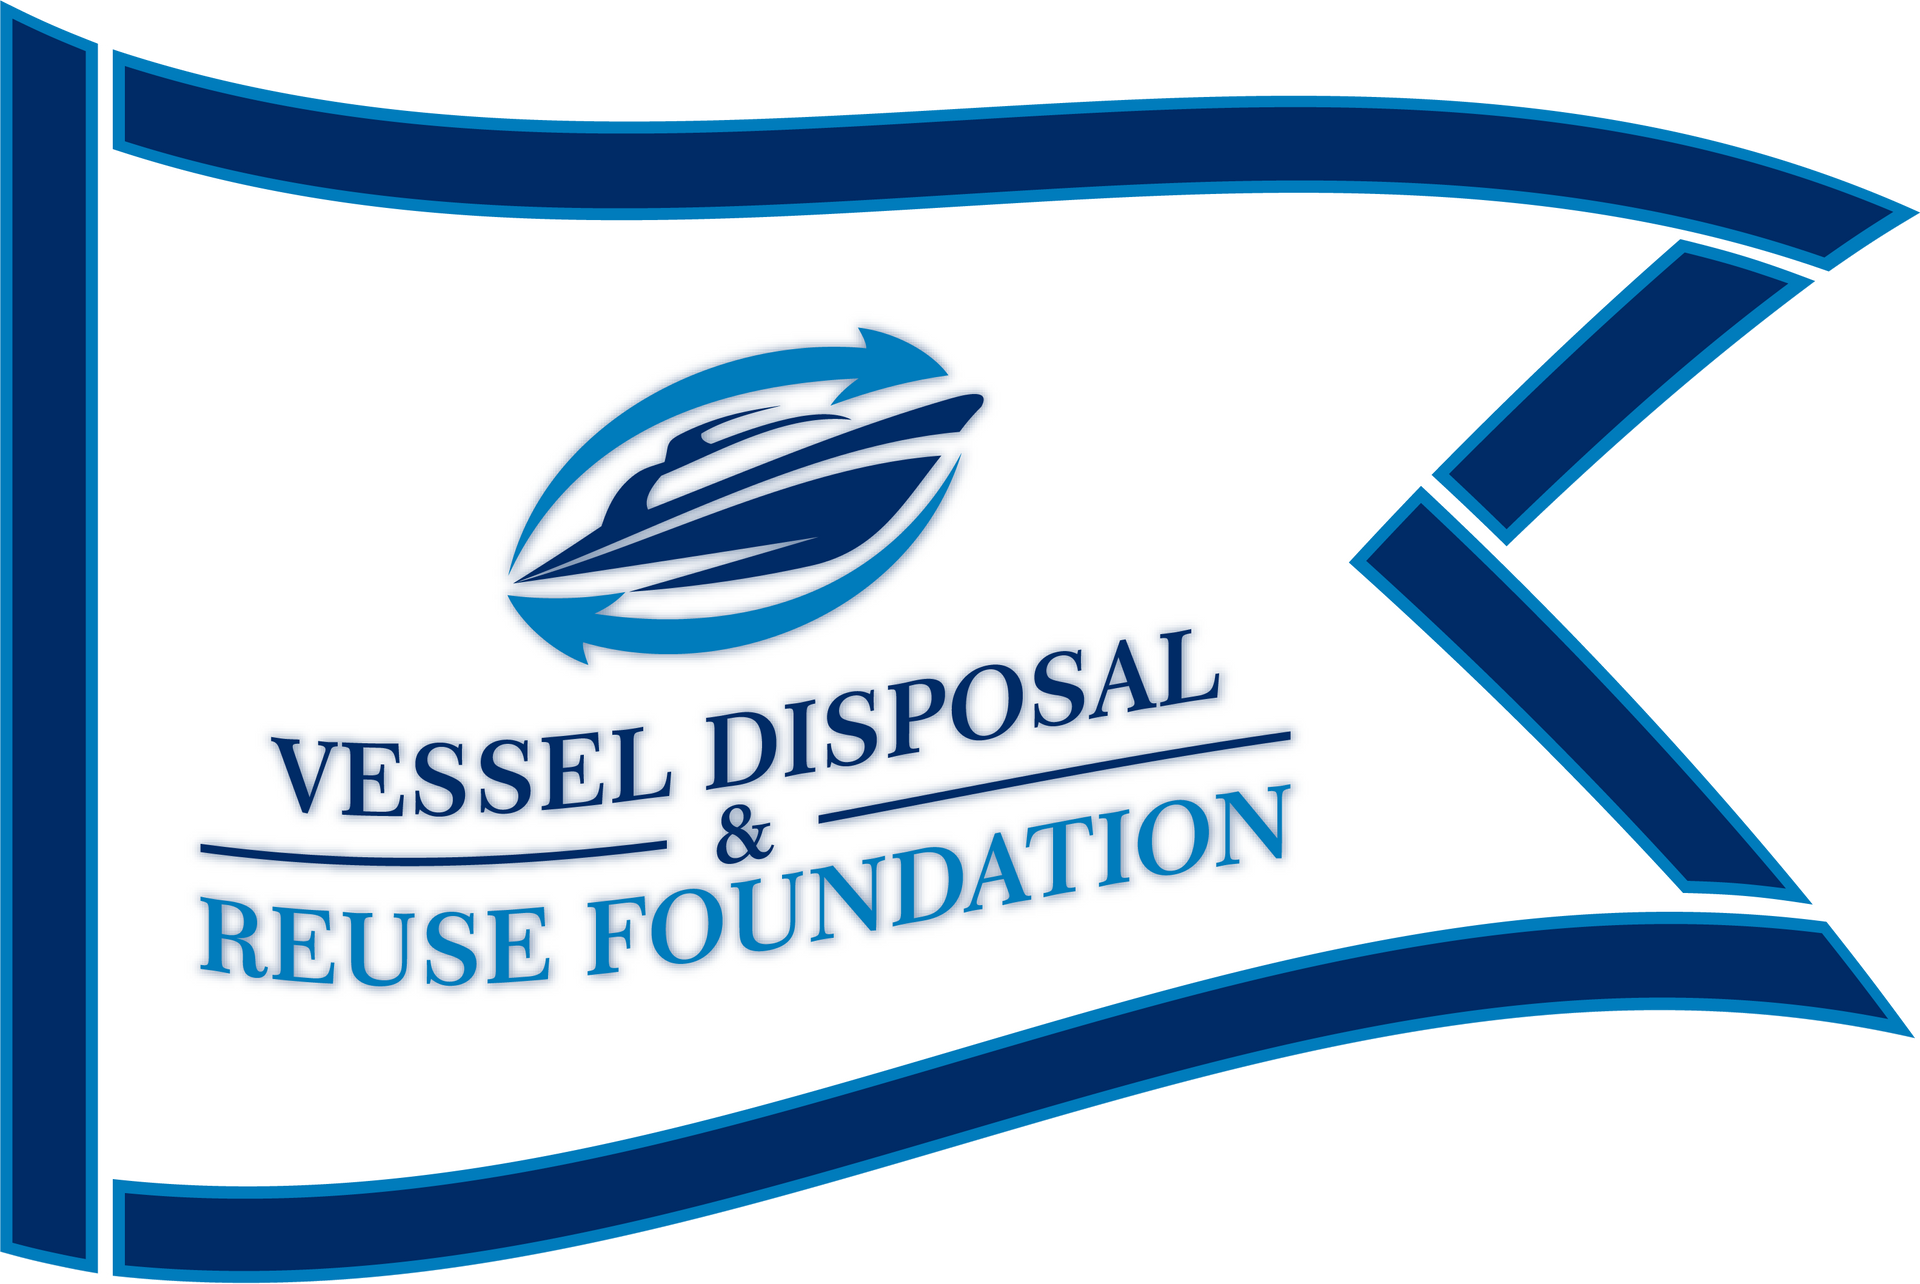 Vessel Disposal & Reuse Foundation